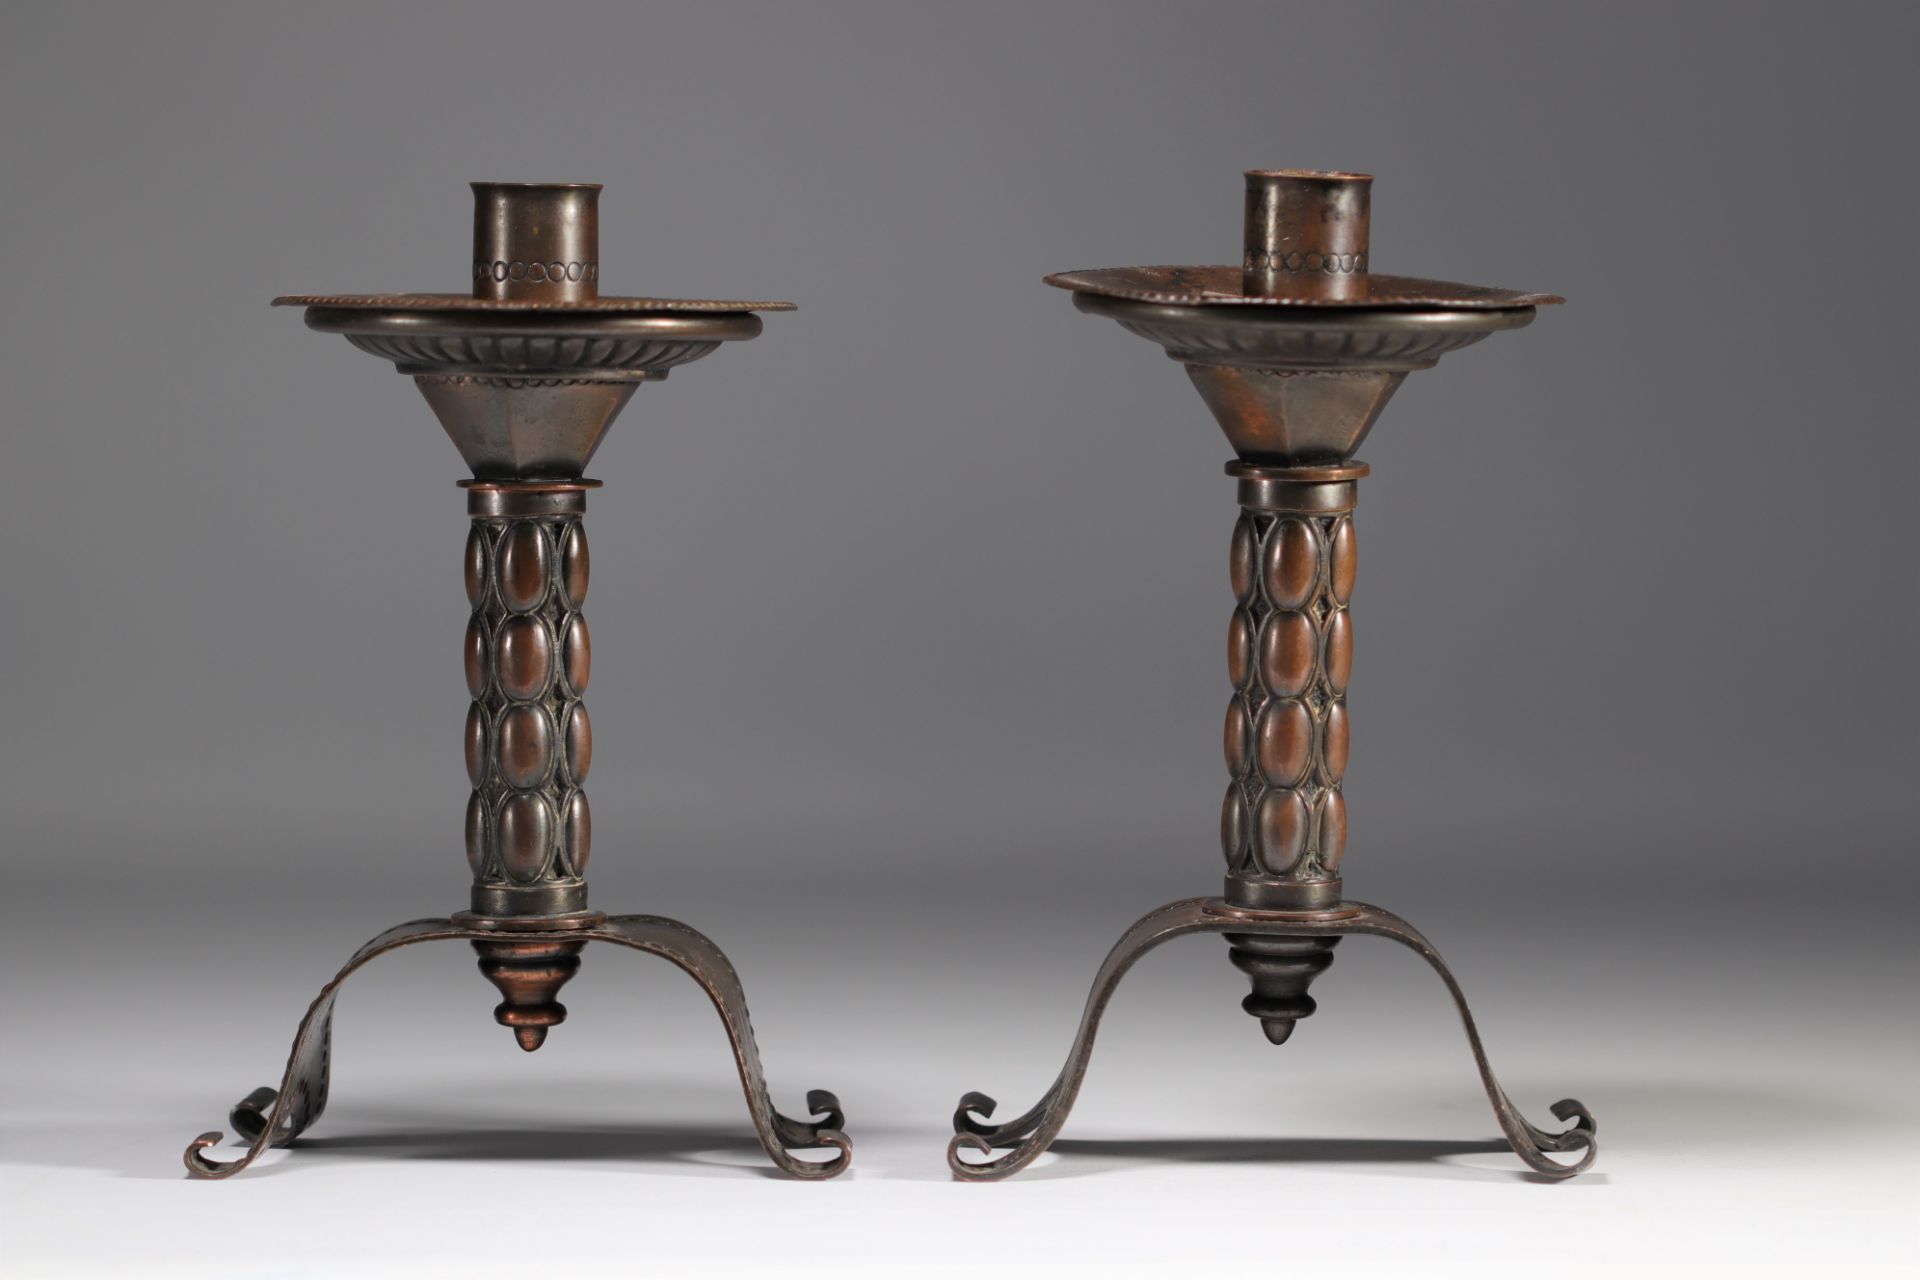 (2) Pair of two-legged candlesticks - Art Nouveau